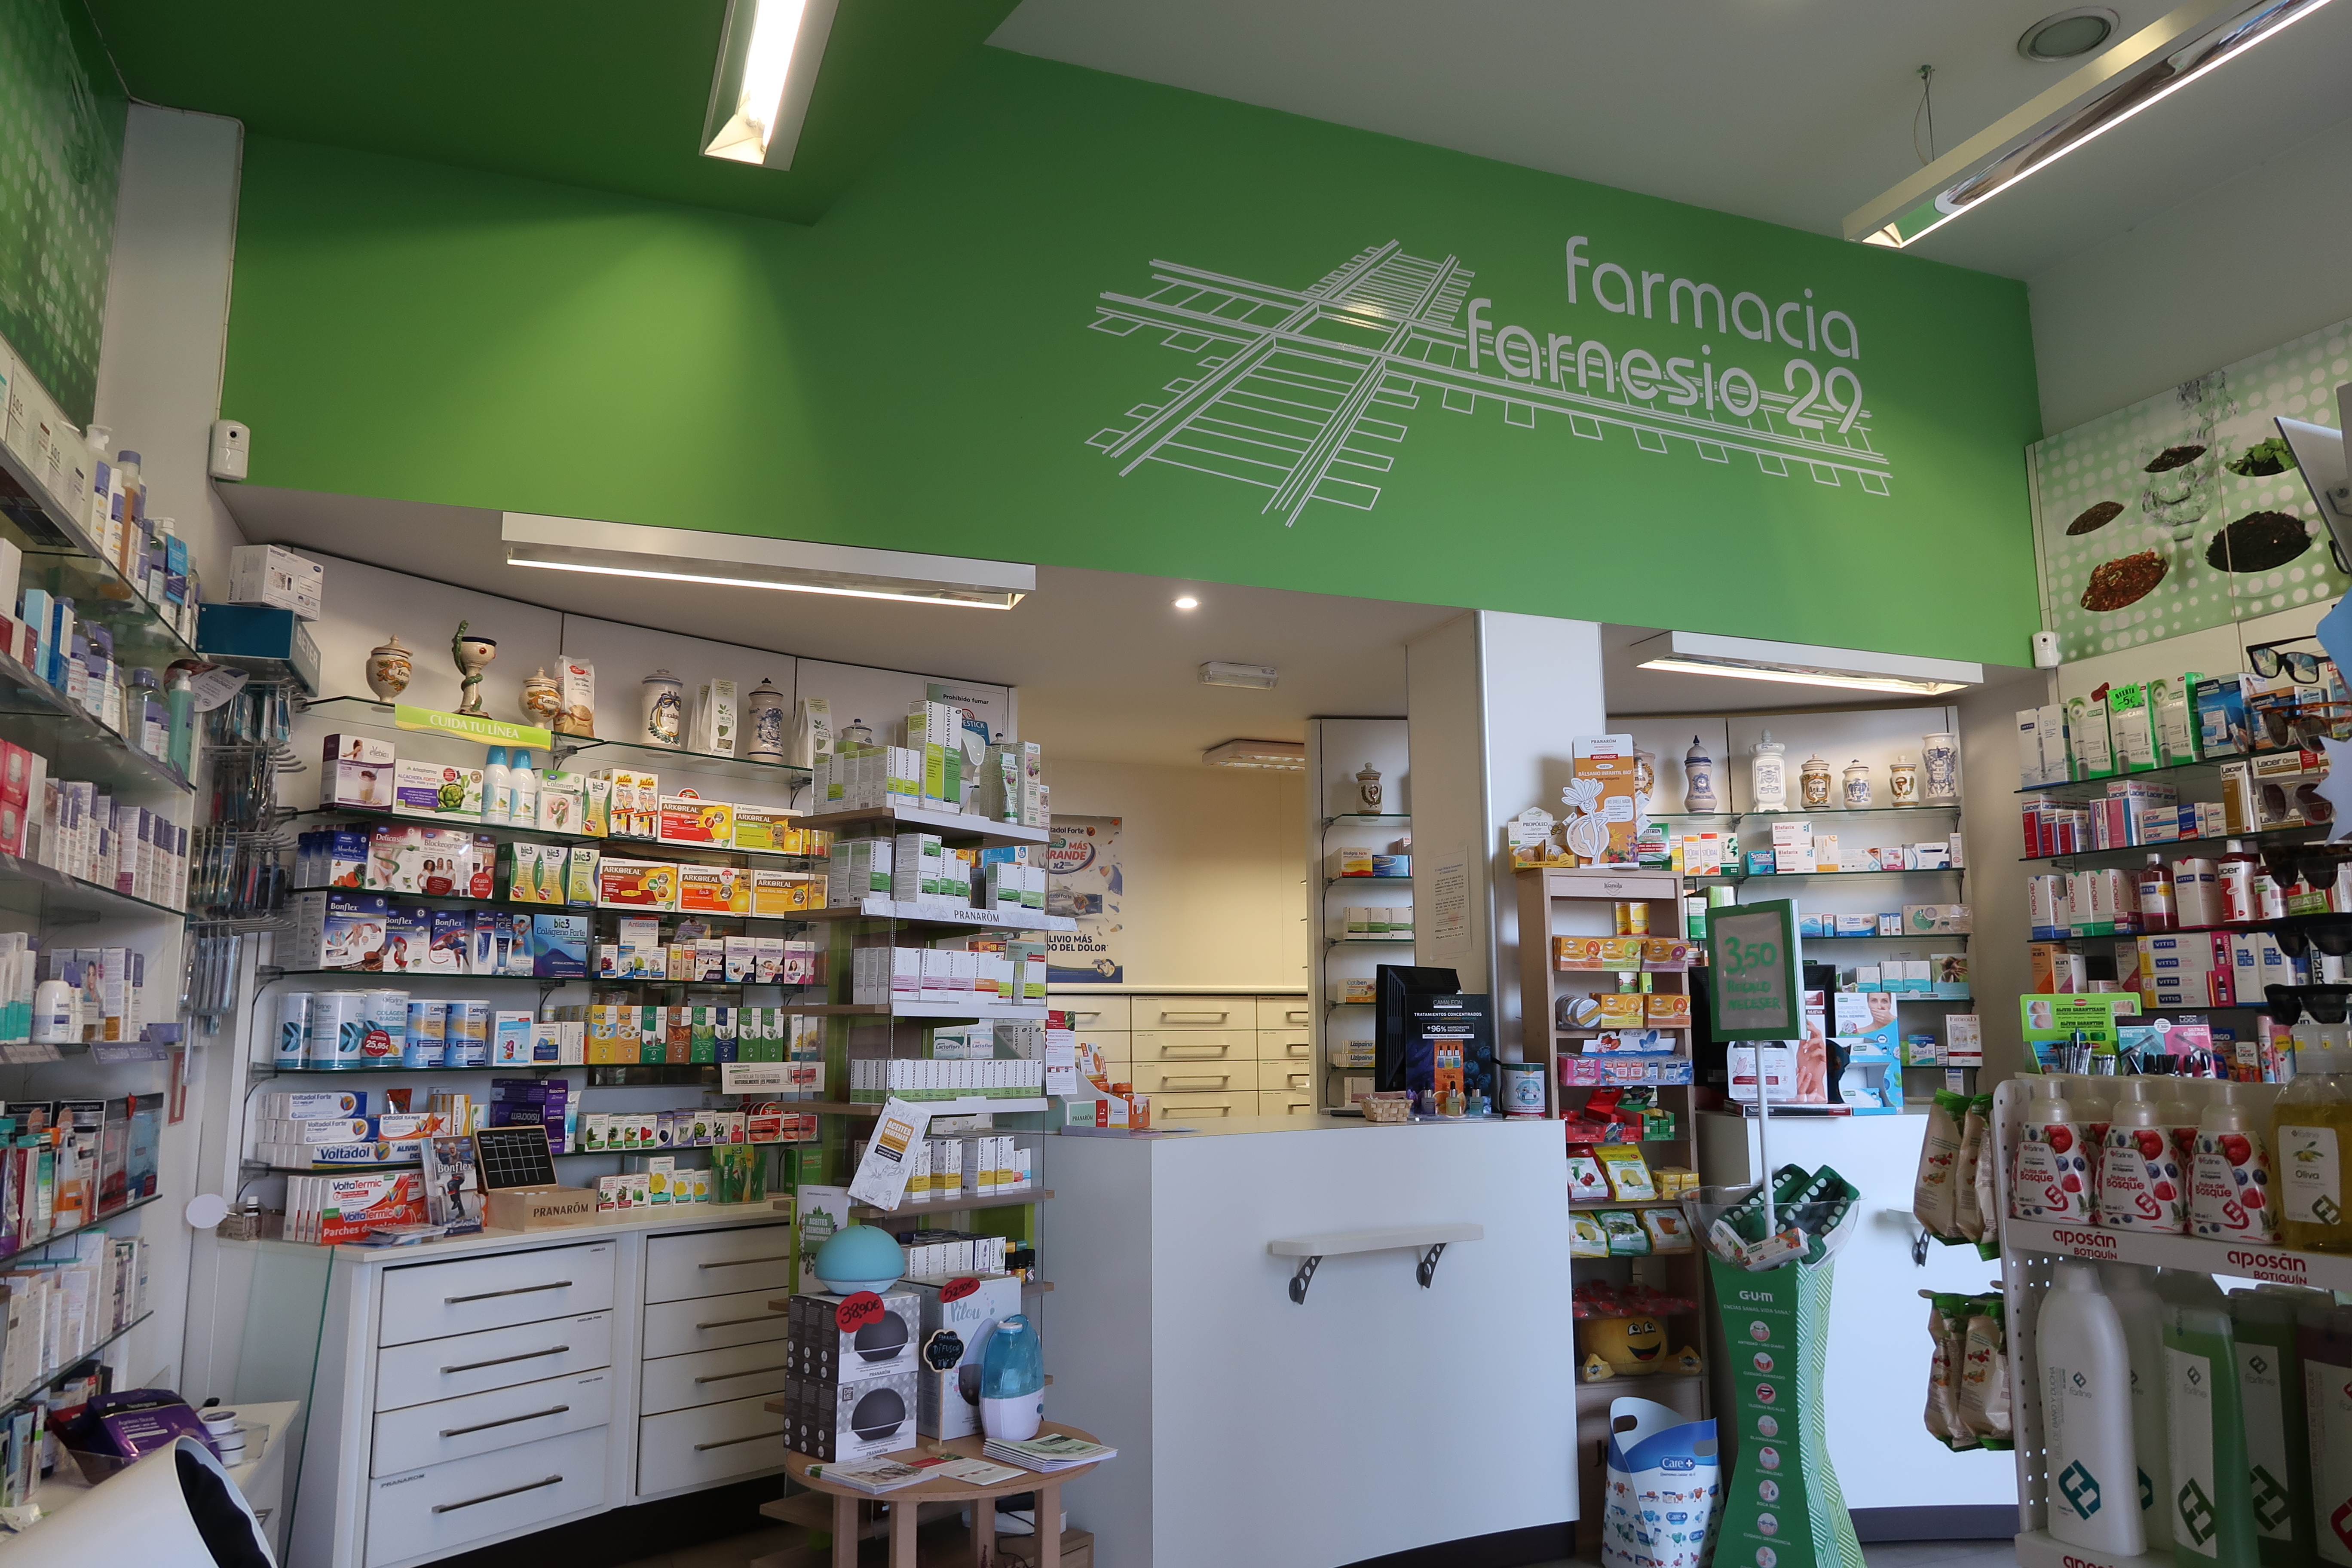 Foto de Farmacia farnesio 29 (Lda. Basilia Illana Fernández) Valladolid